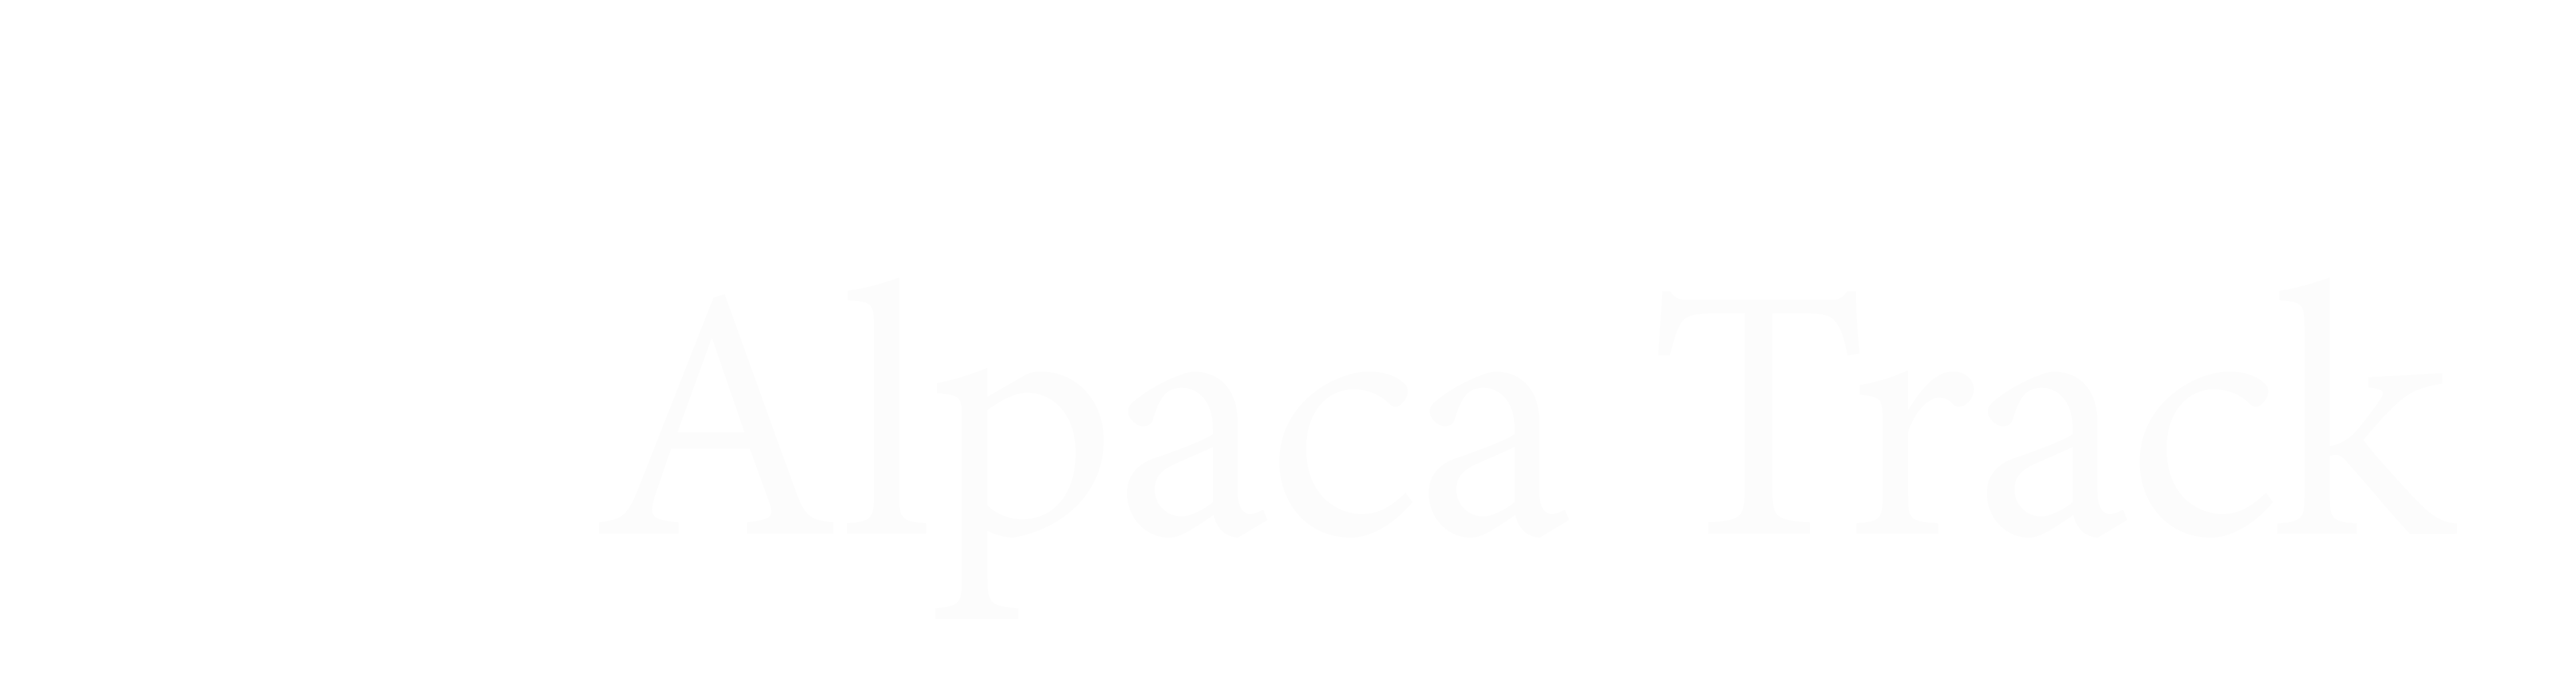 Alpaca Track Logo